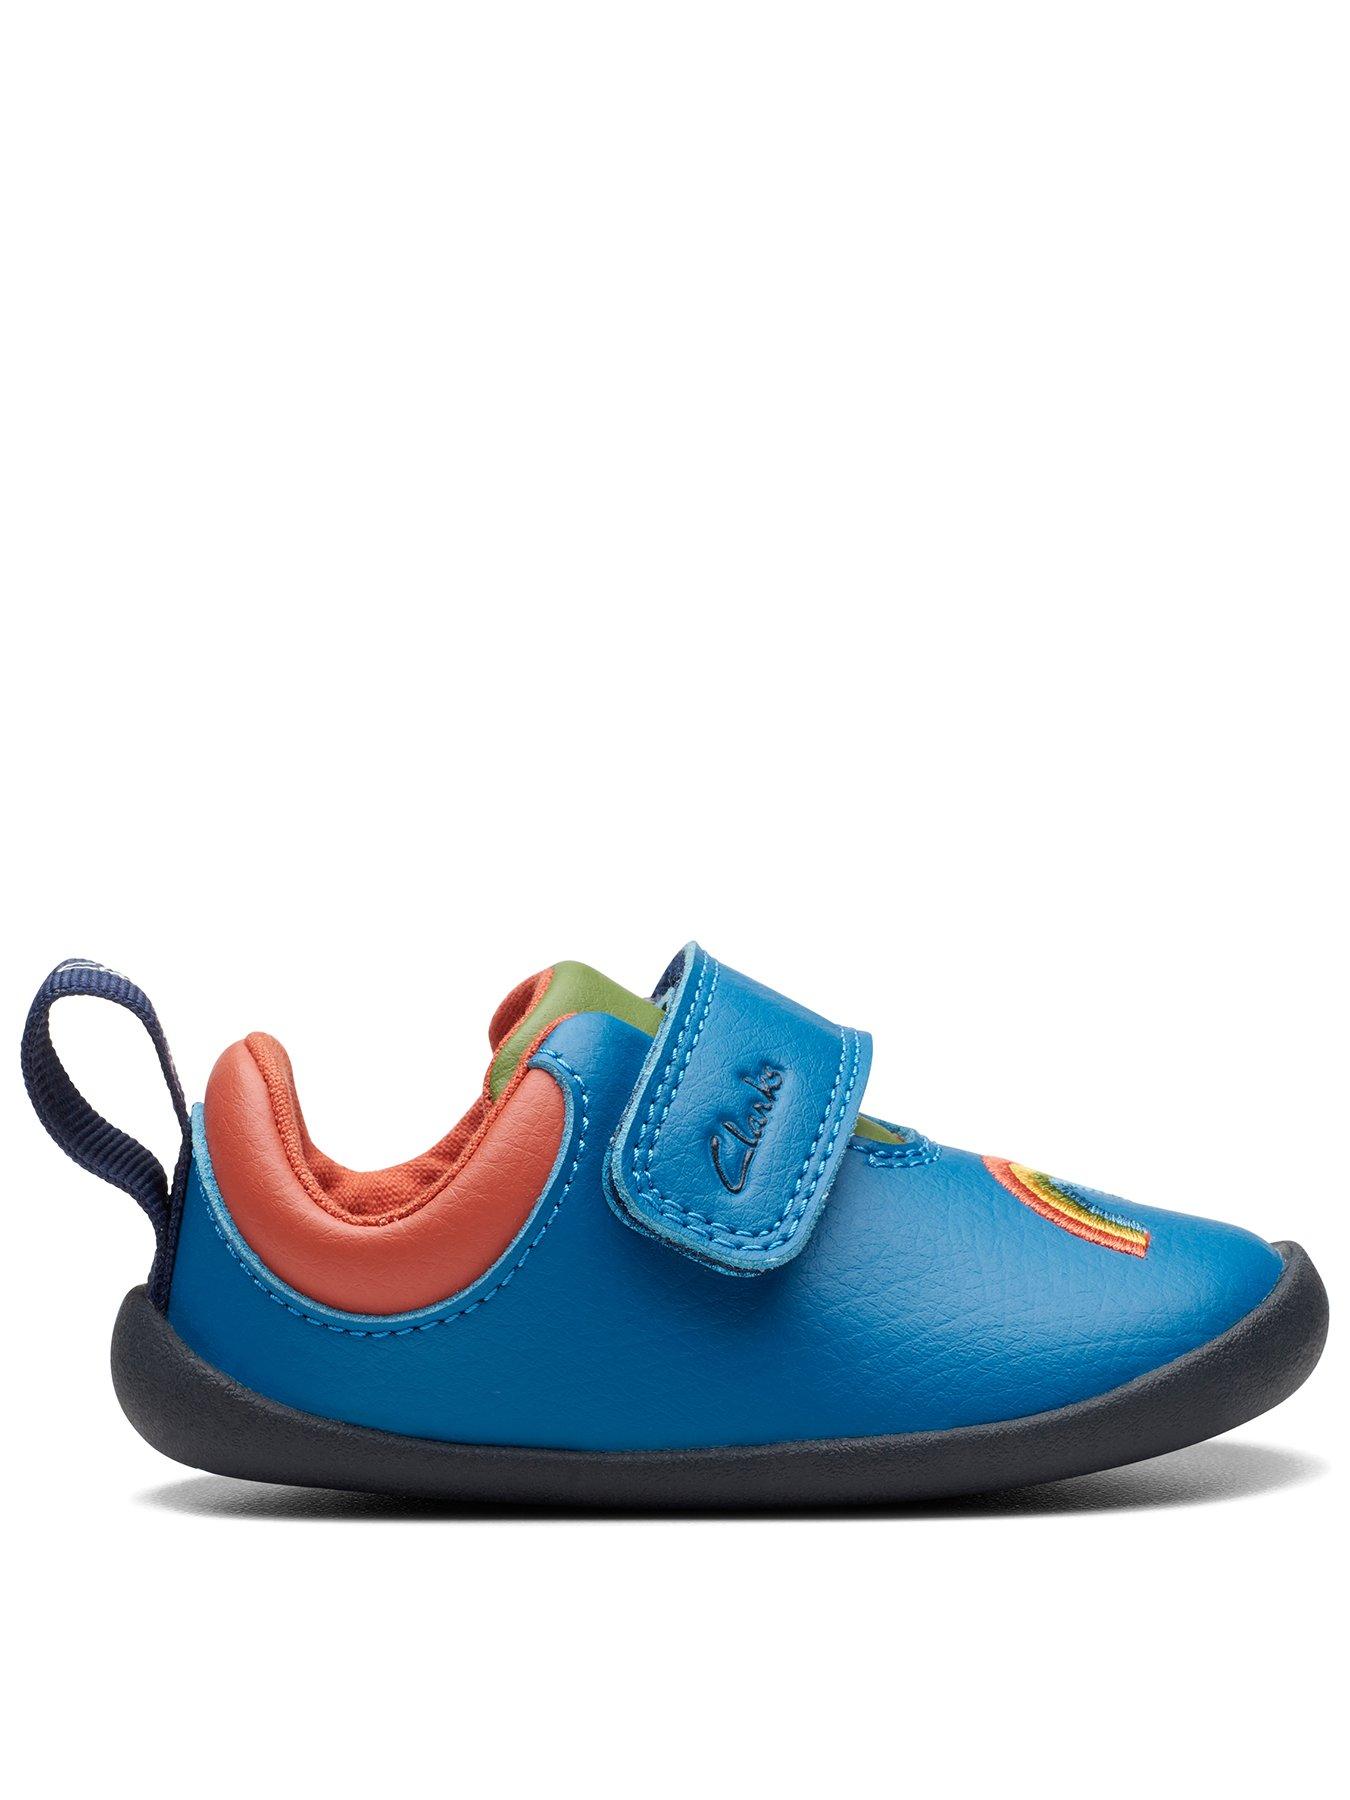 Clarks Toddler Roamer Bark T Shoes, Blue, Size 2.5 Younger